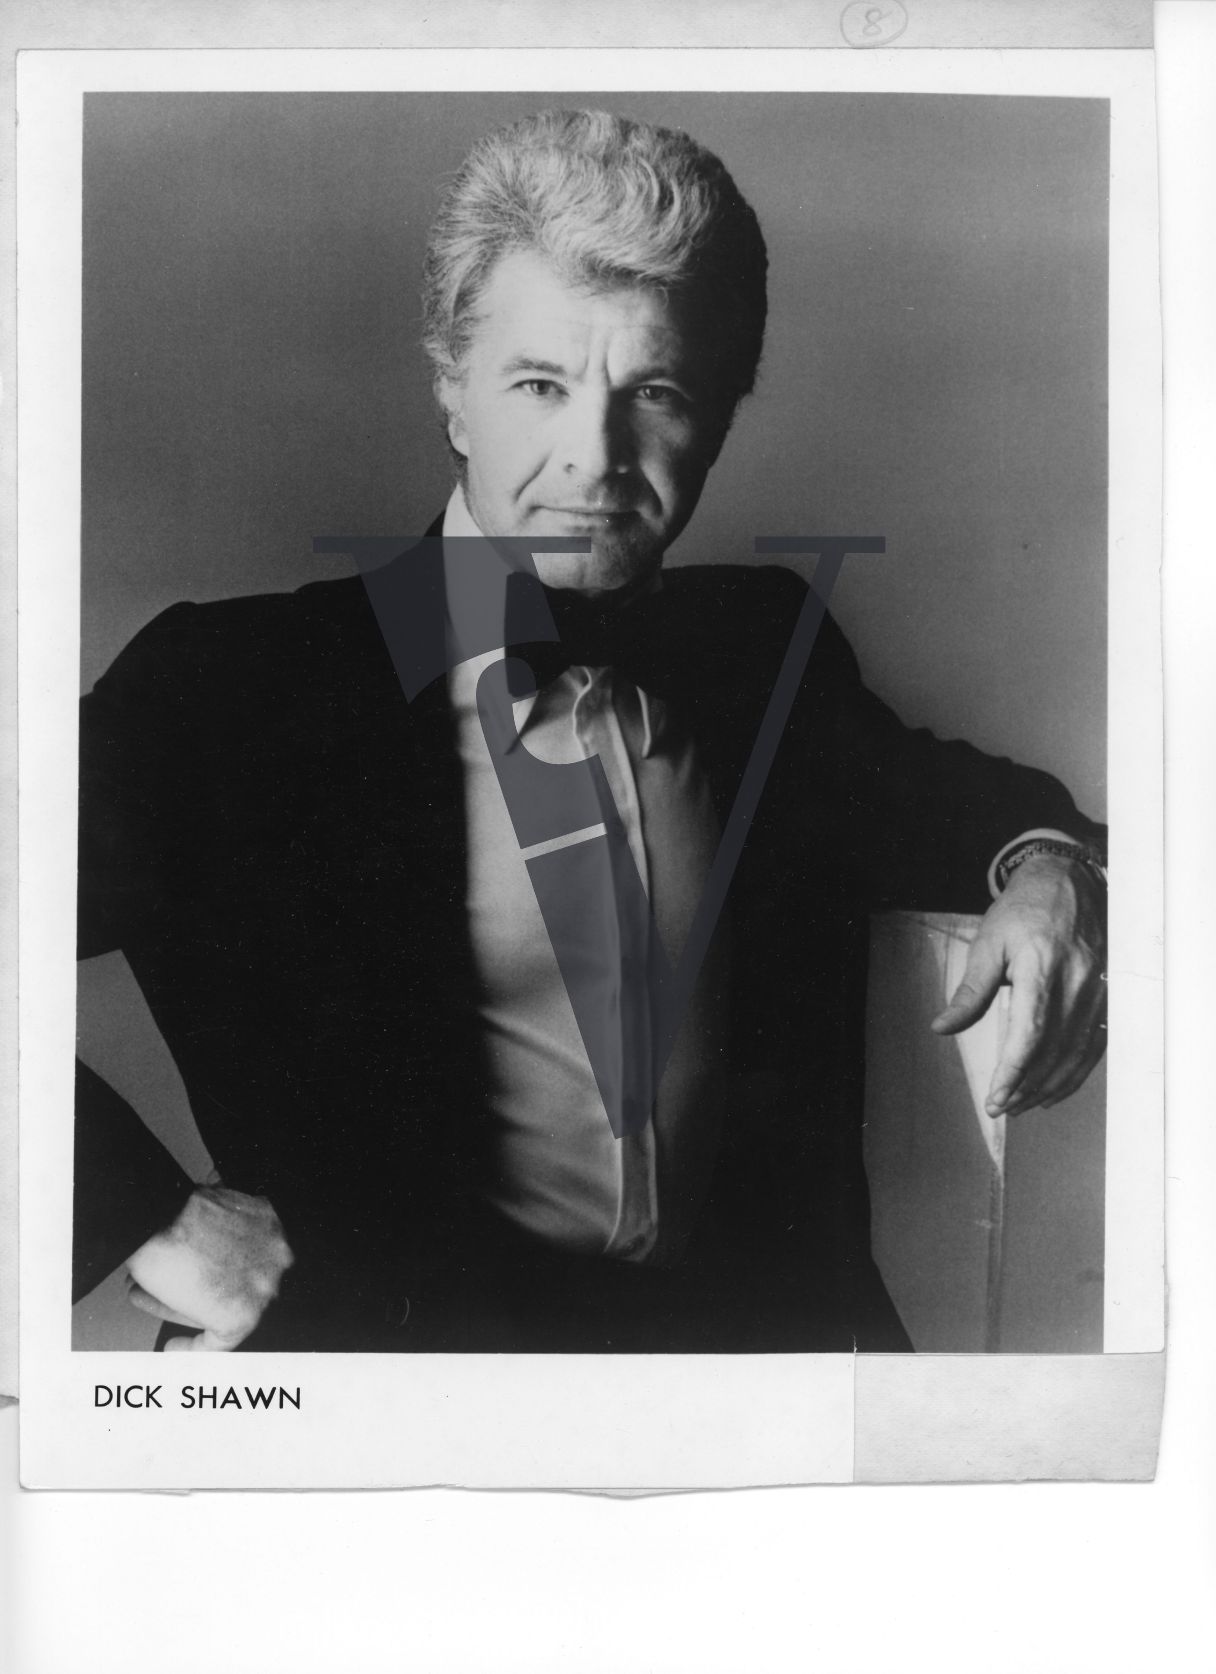 Dick Shawn, actor, comedian, comp card, portrait.